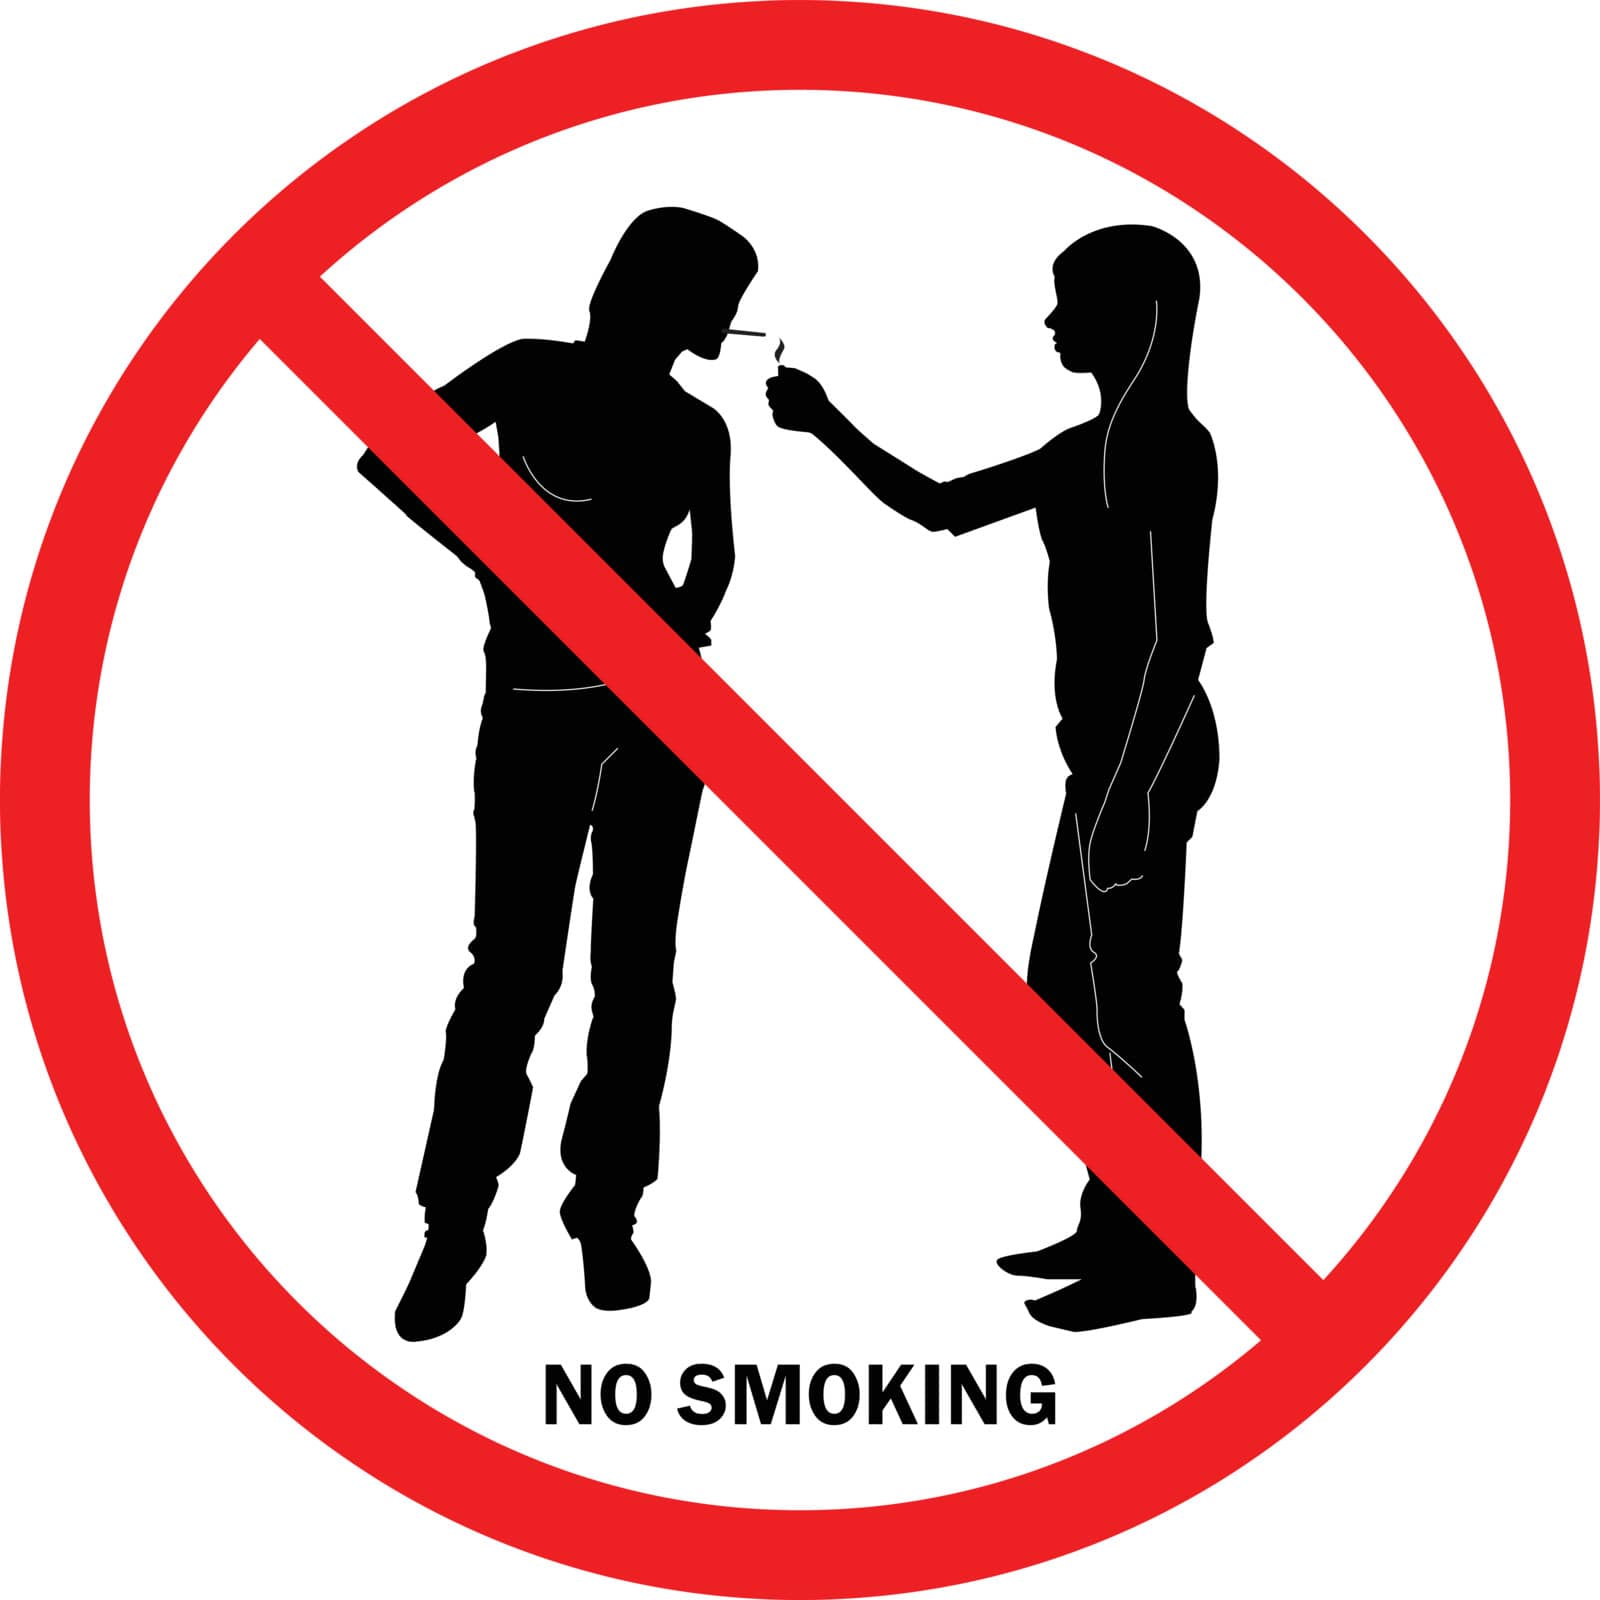 No Smoking sign by sateda